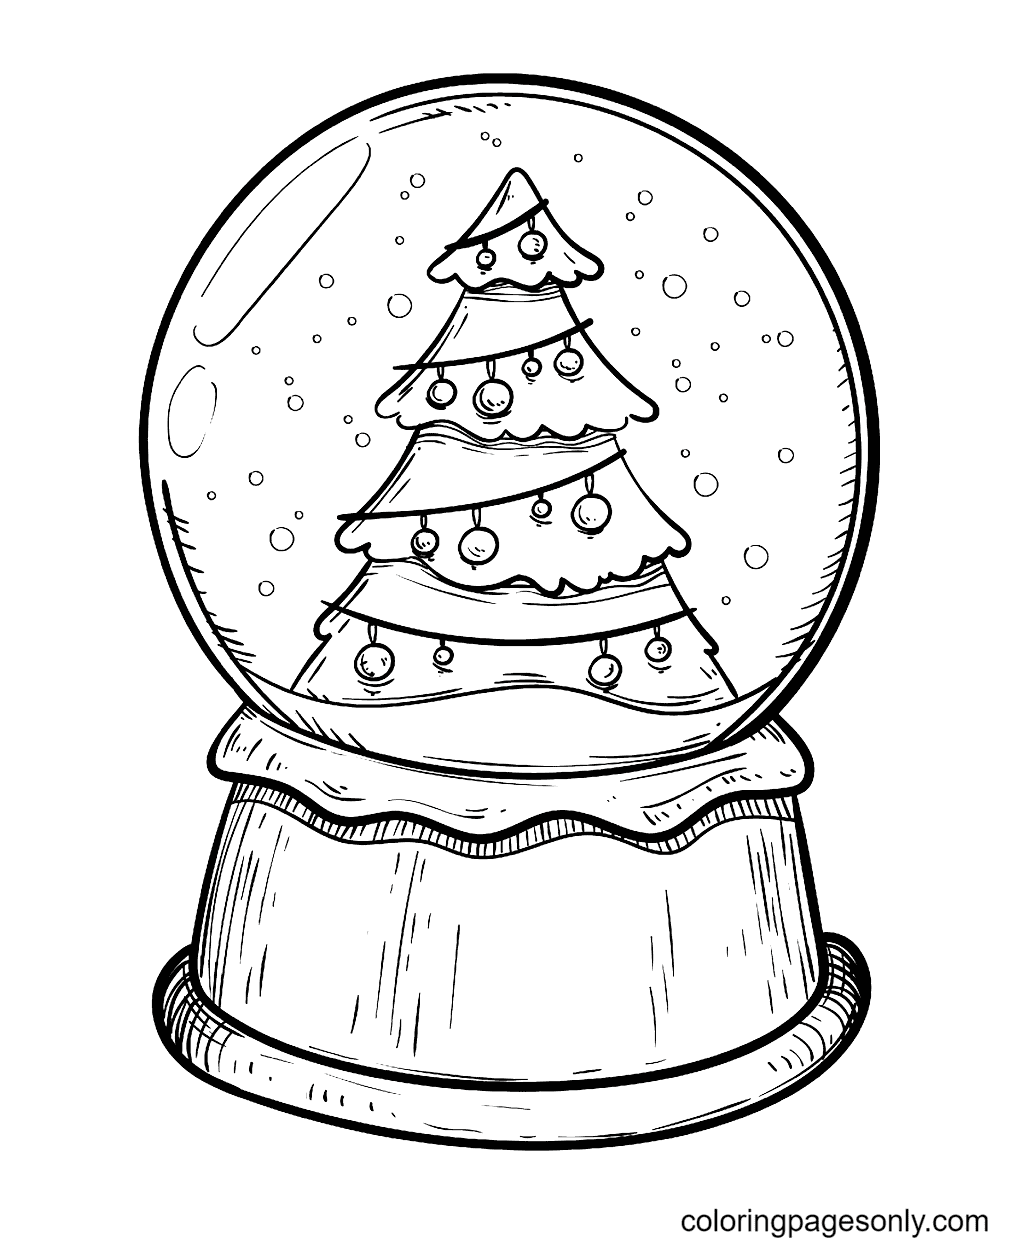 Раскраска новогодний шар со снегом